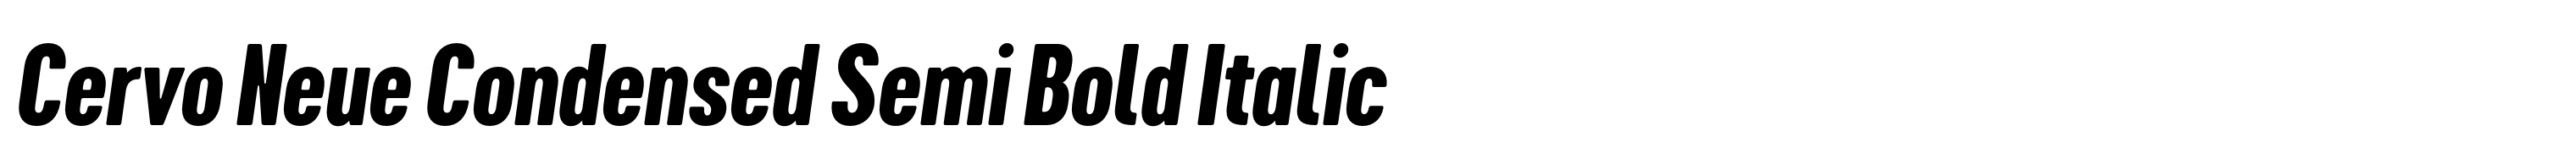 Cervo Neue Condensed Semi Bold Italic